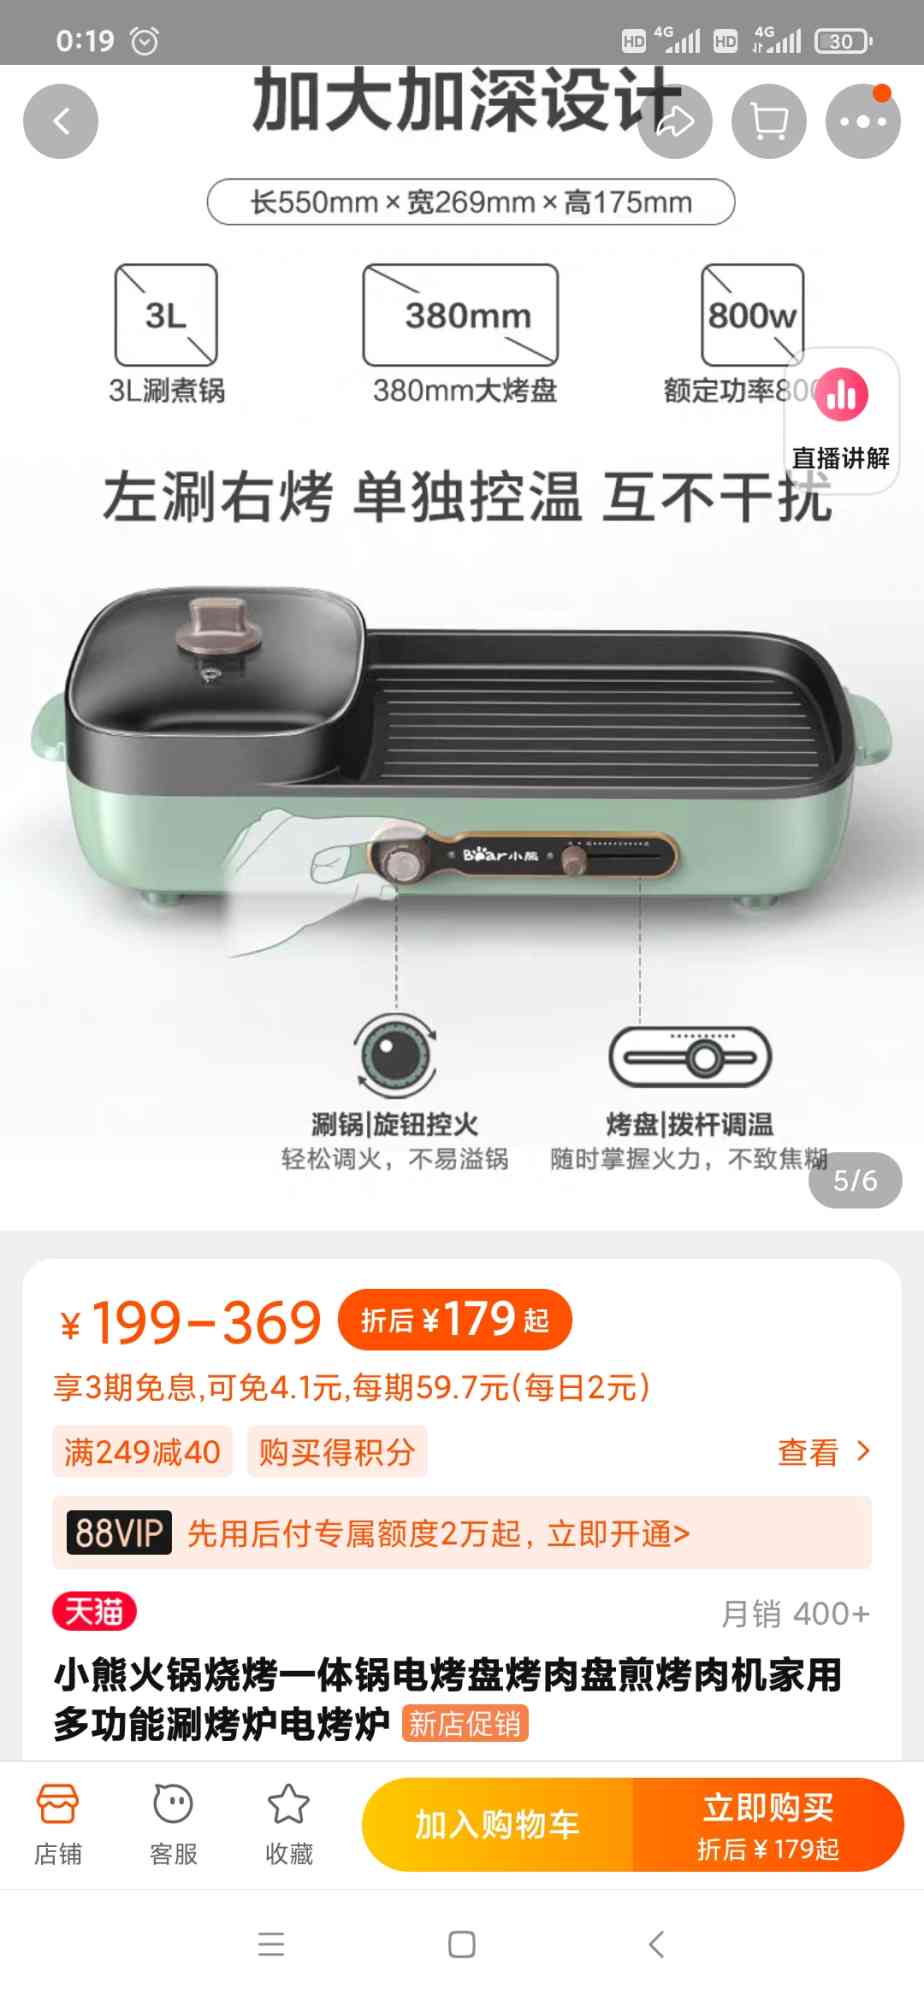 Screenshot_2021-07-01-00-19-05-065_com.taobao.taobao.jpg